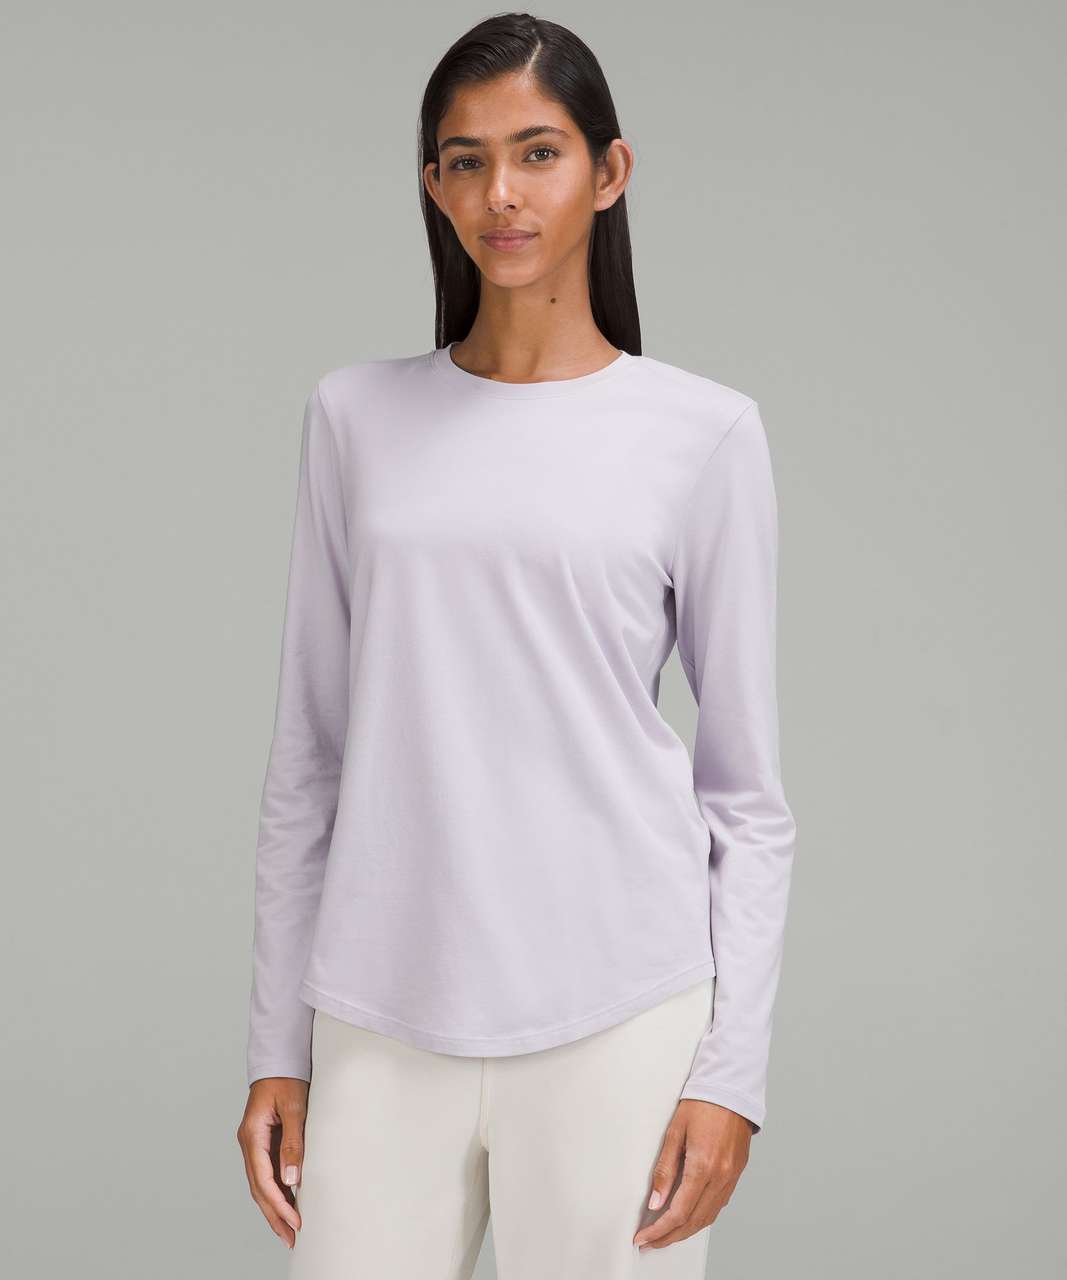 Lululemon Love Long Sleeve Shirt - Faint Lavender